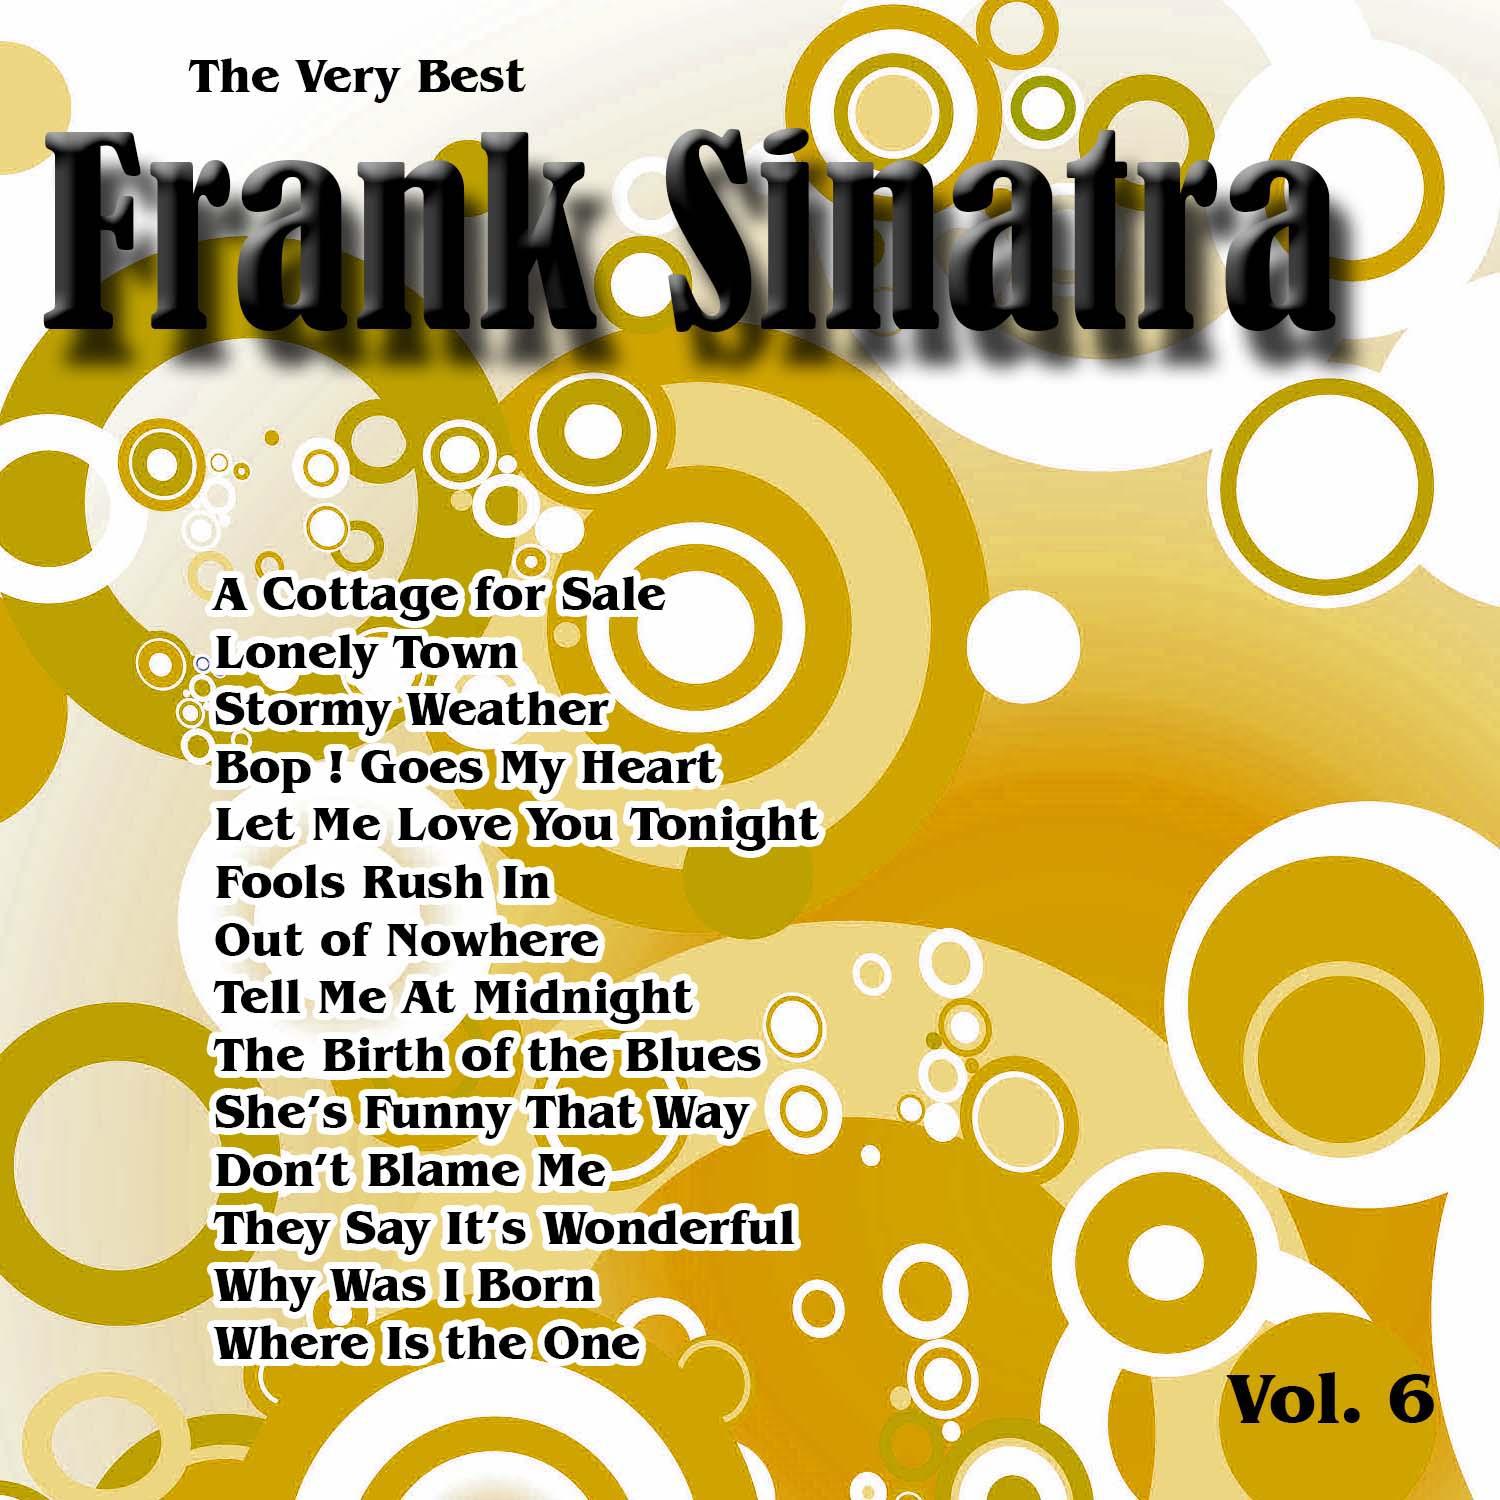 The Very Best: Frank Sinatra Vol. 6